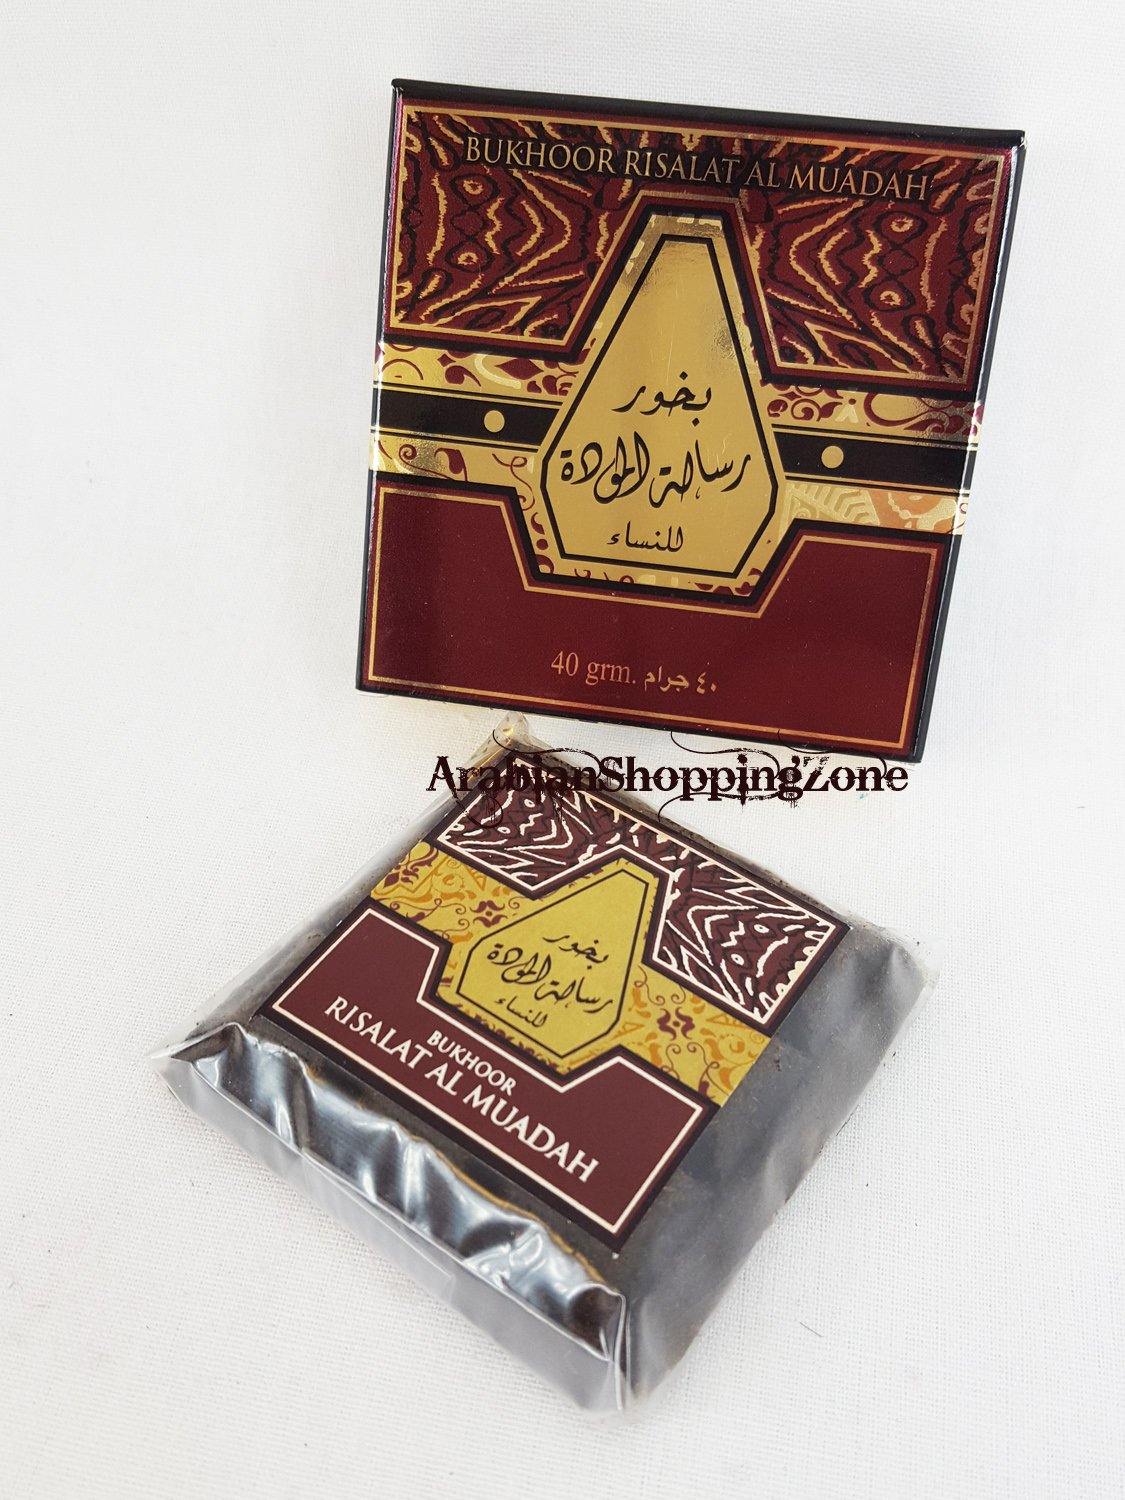 50-type ARD ALZAAFARAN Bakhoor Incense Collection 40g - Arabian Shopping Zone